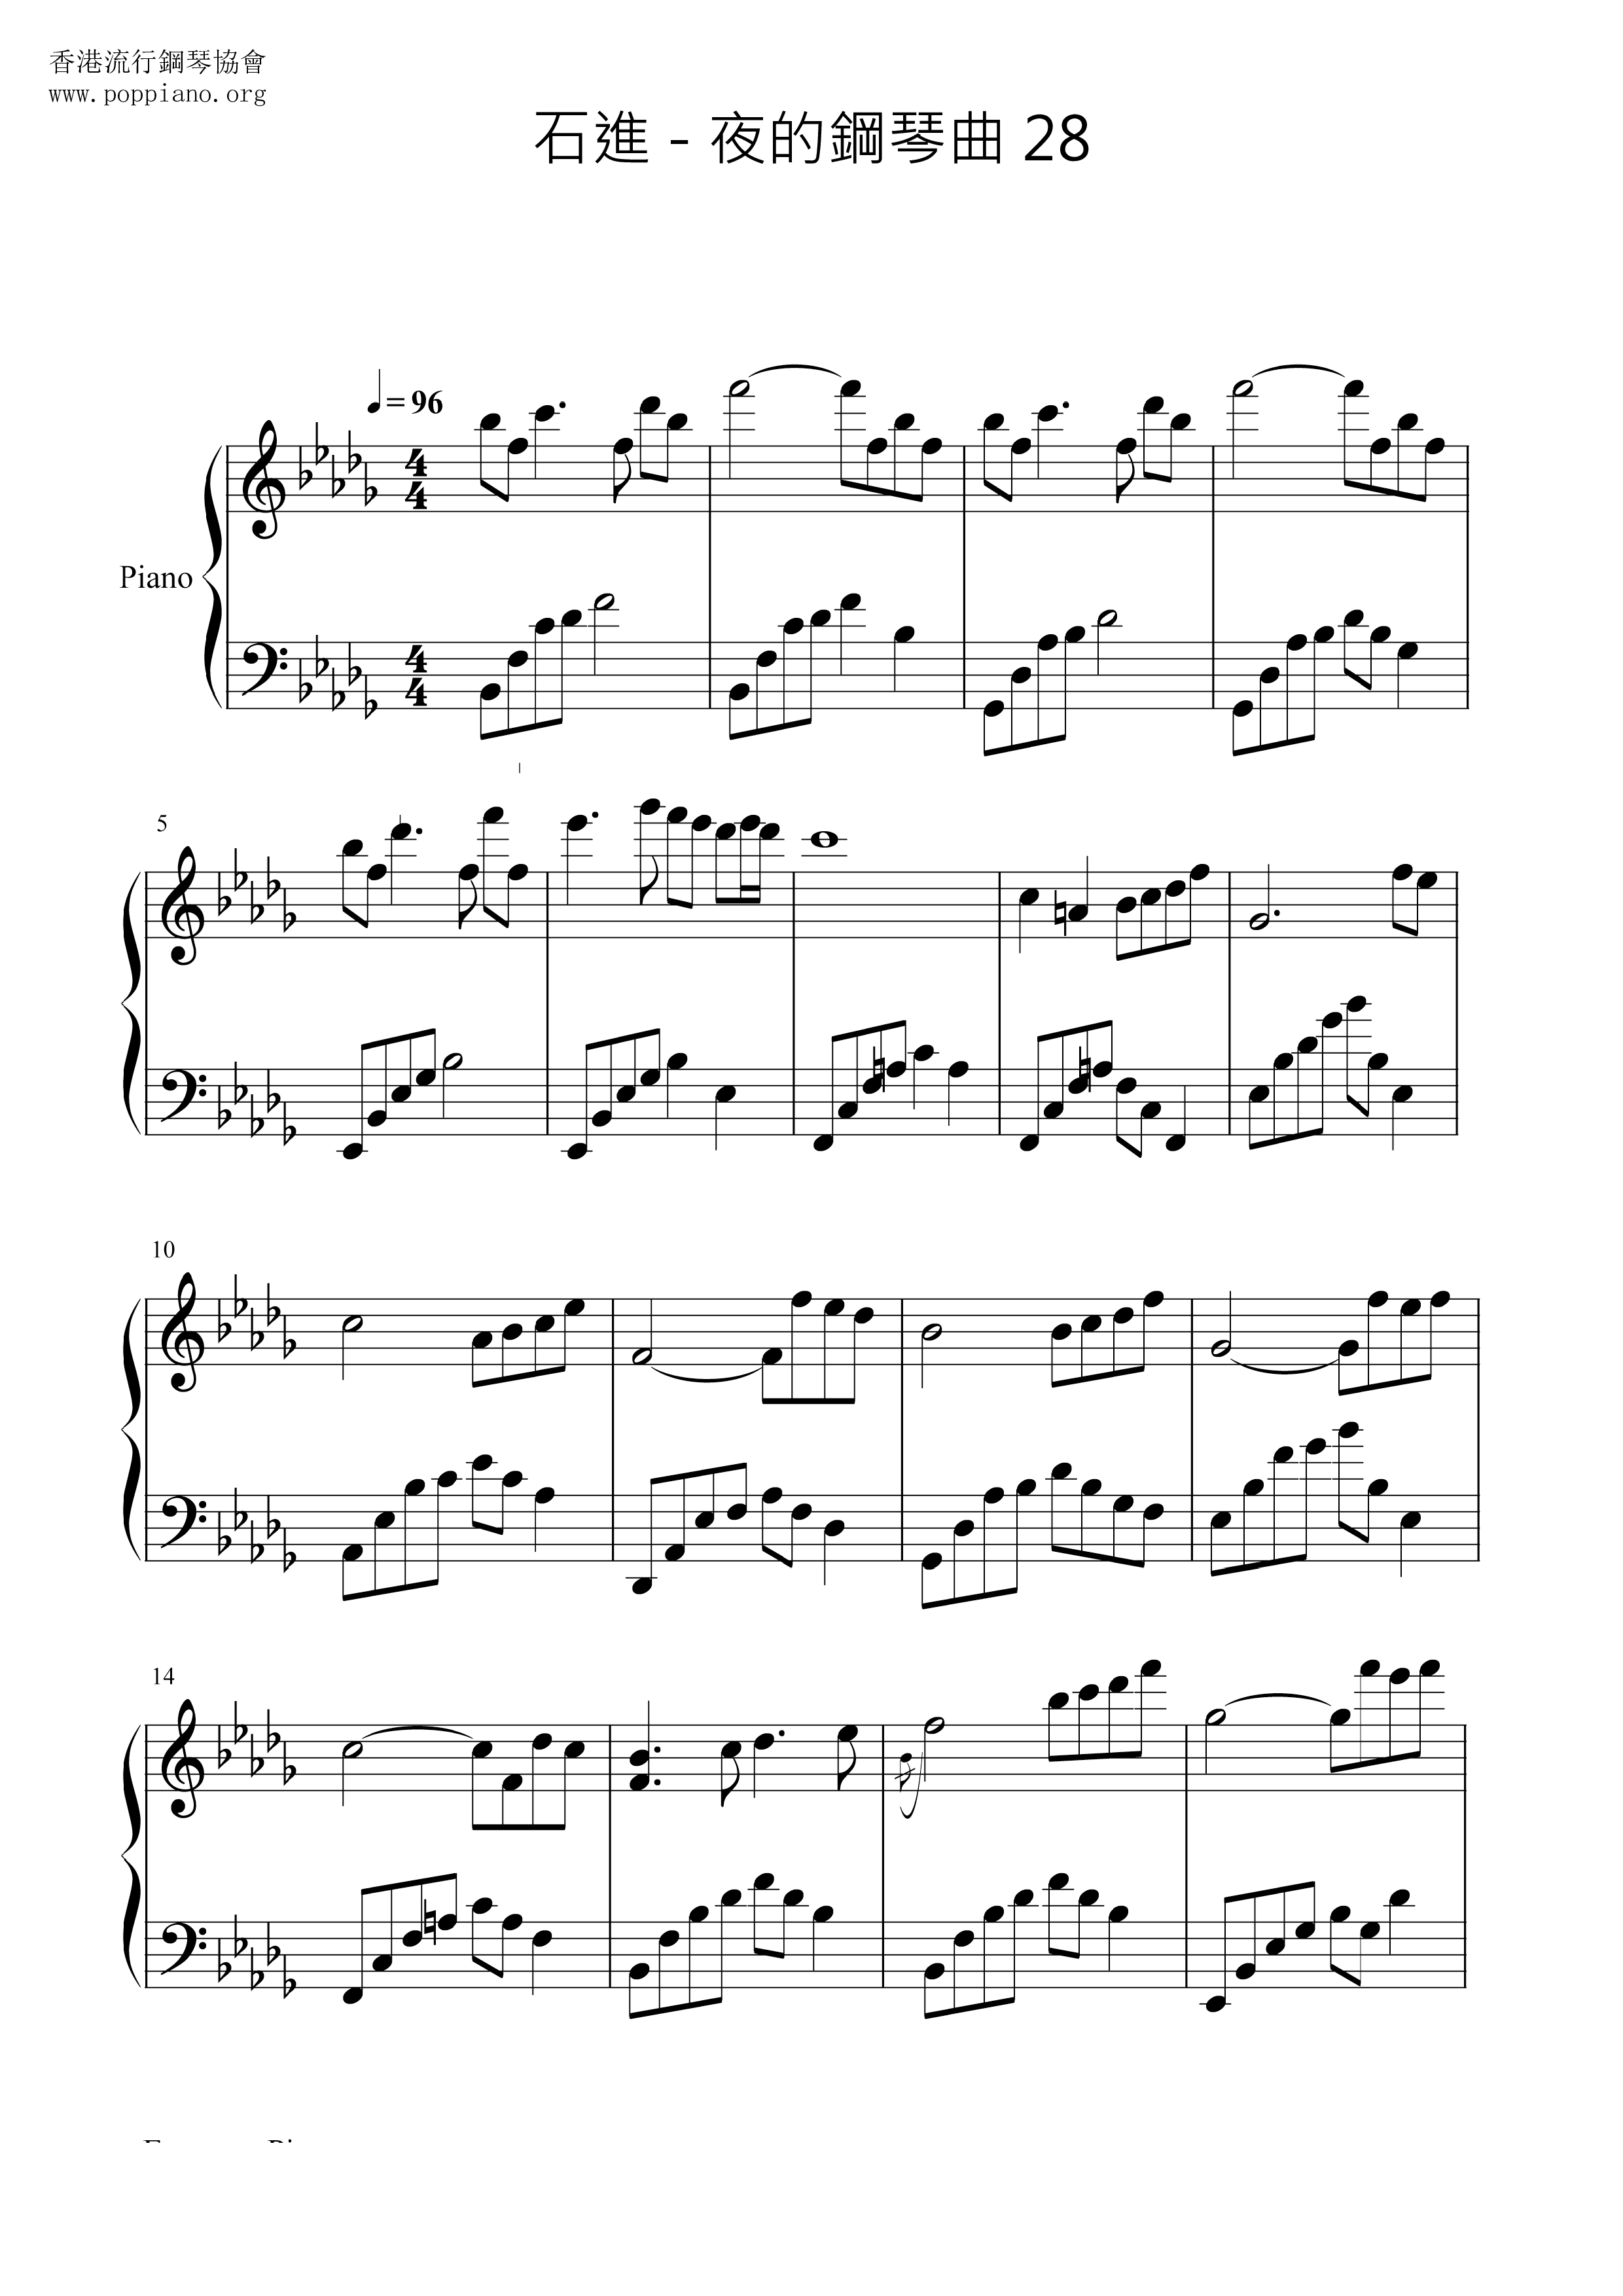 Melody Of The Night 28 Score